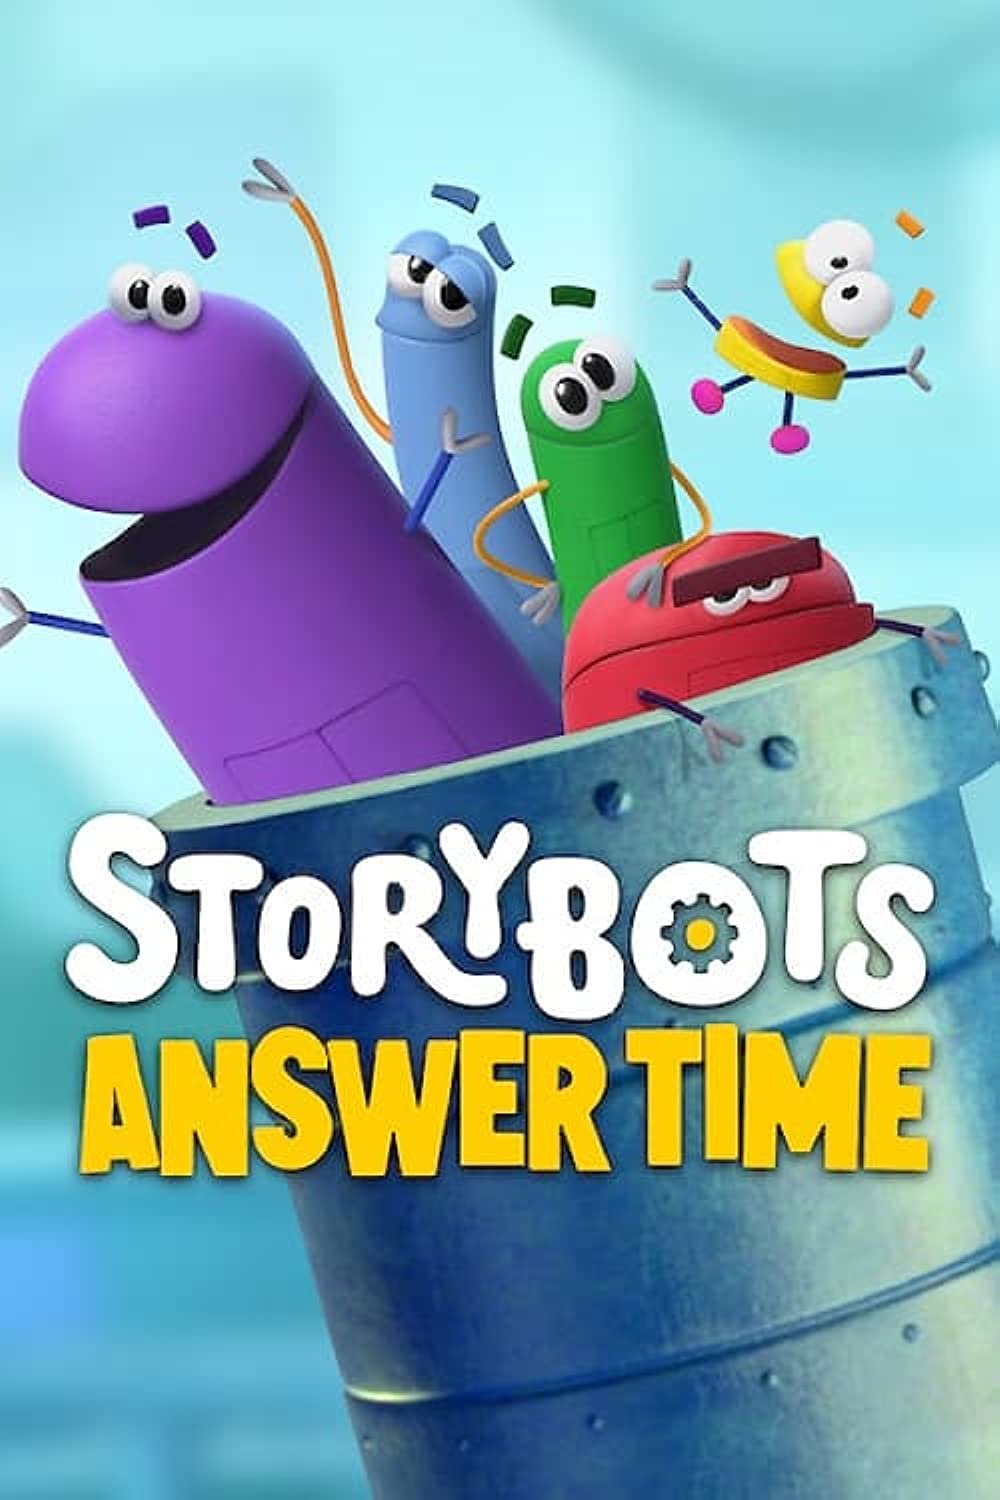 storybots answer time art.jpg